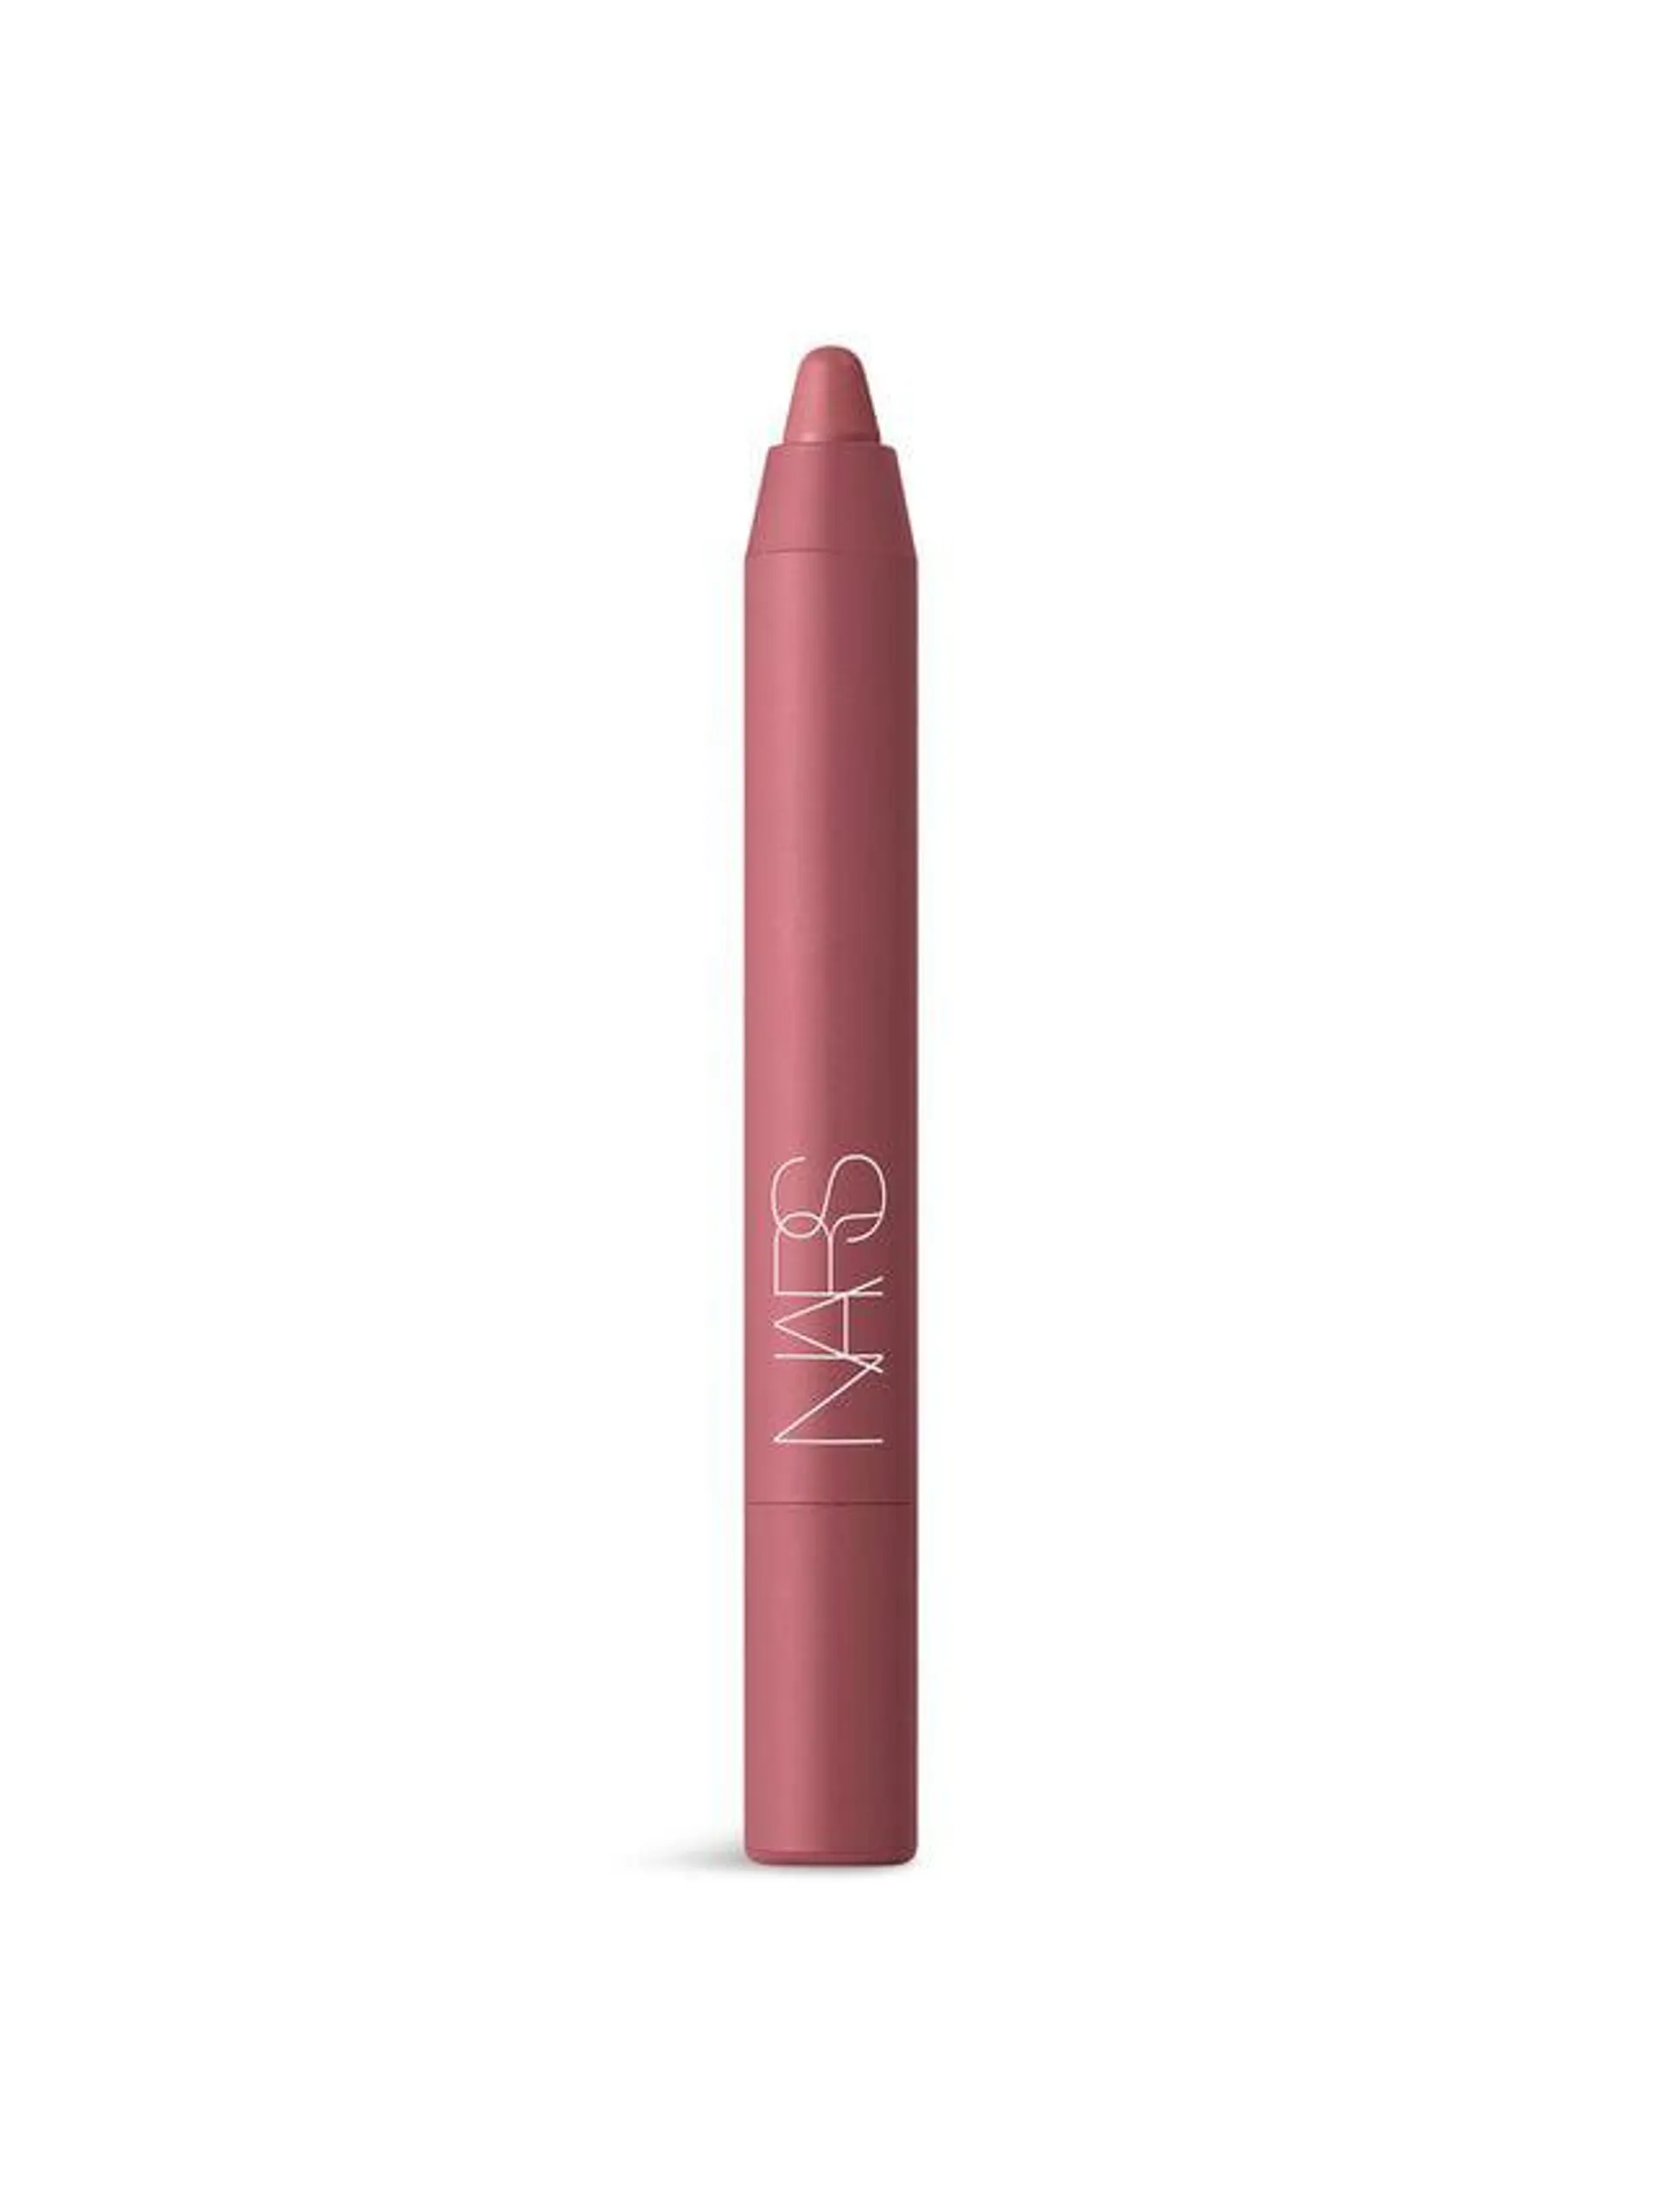 NARS Powermatte High Intensity Lip Pencil